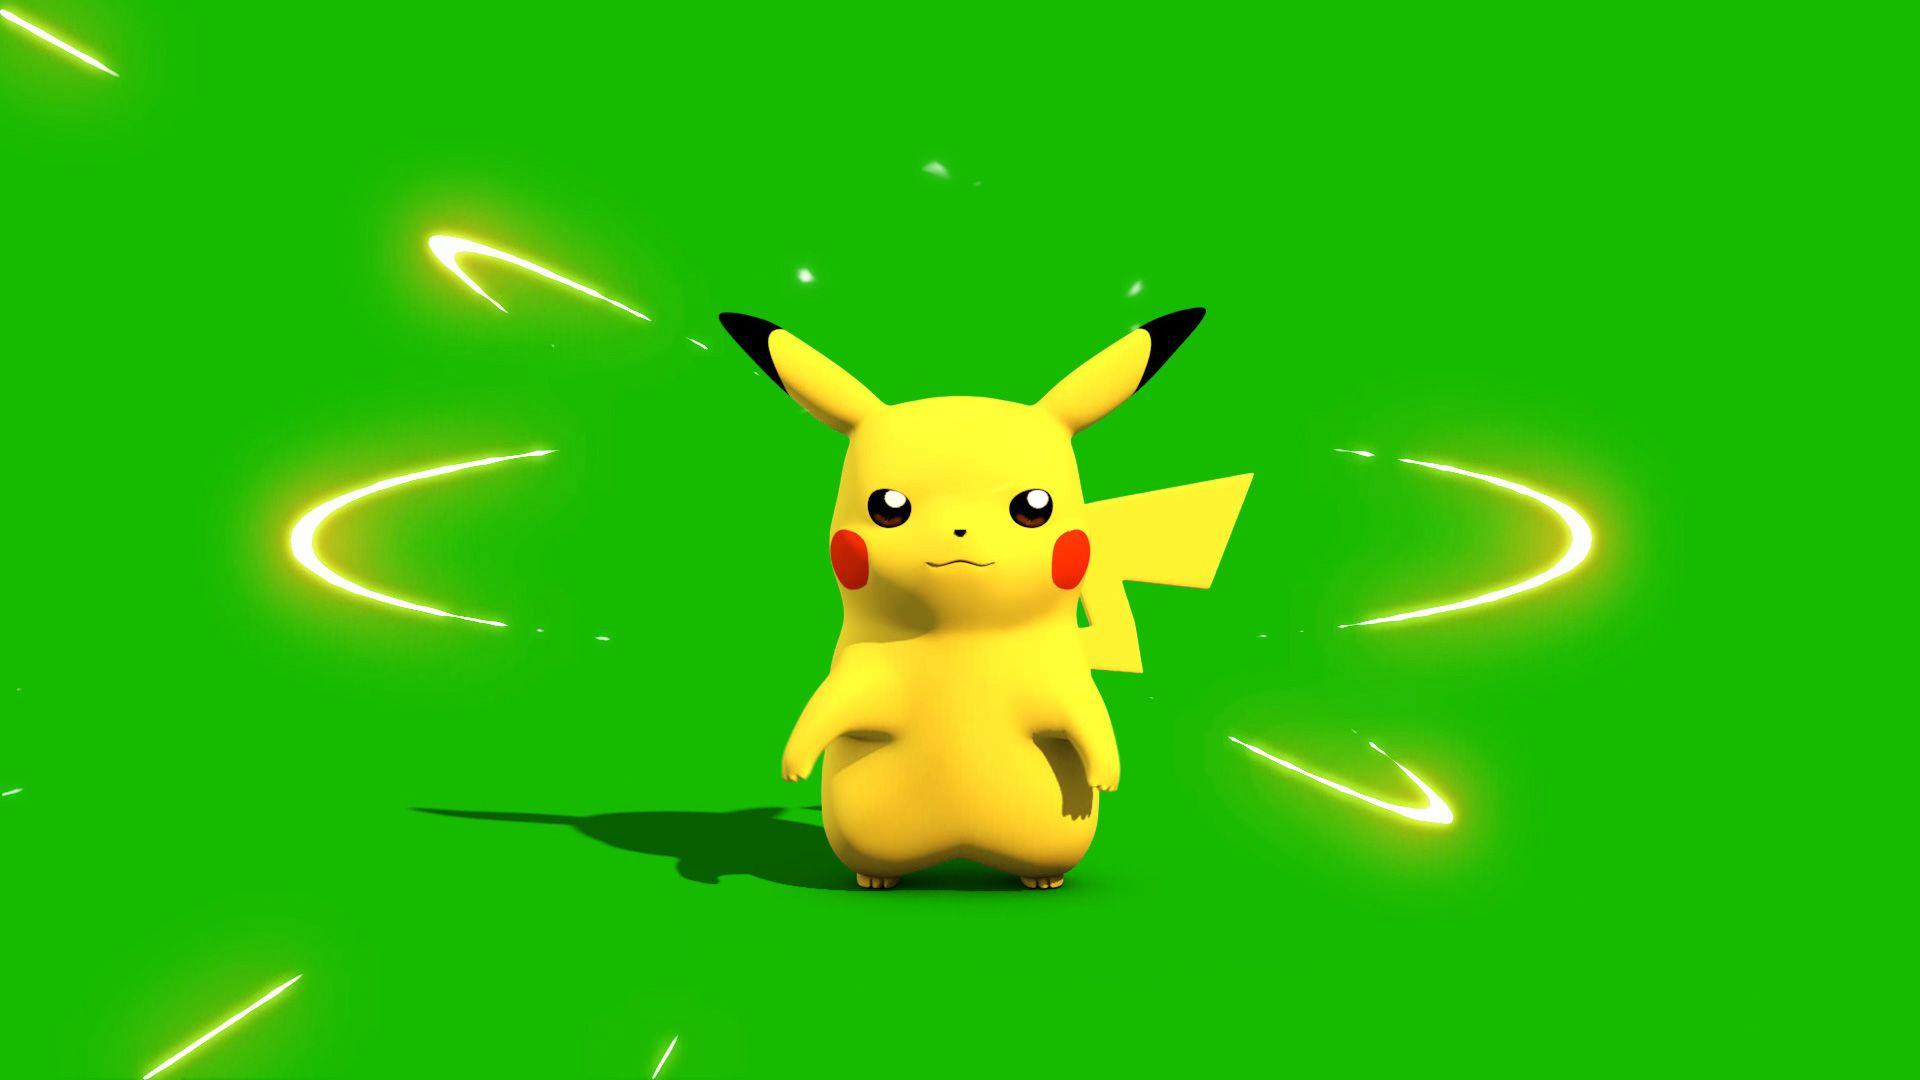 Pikachu Image Download